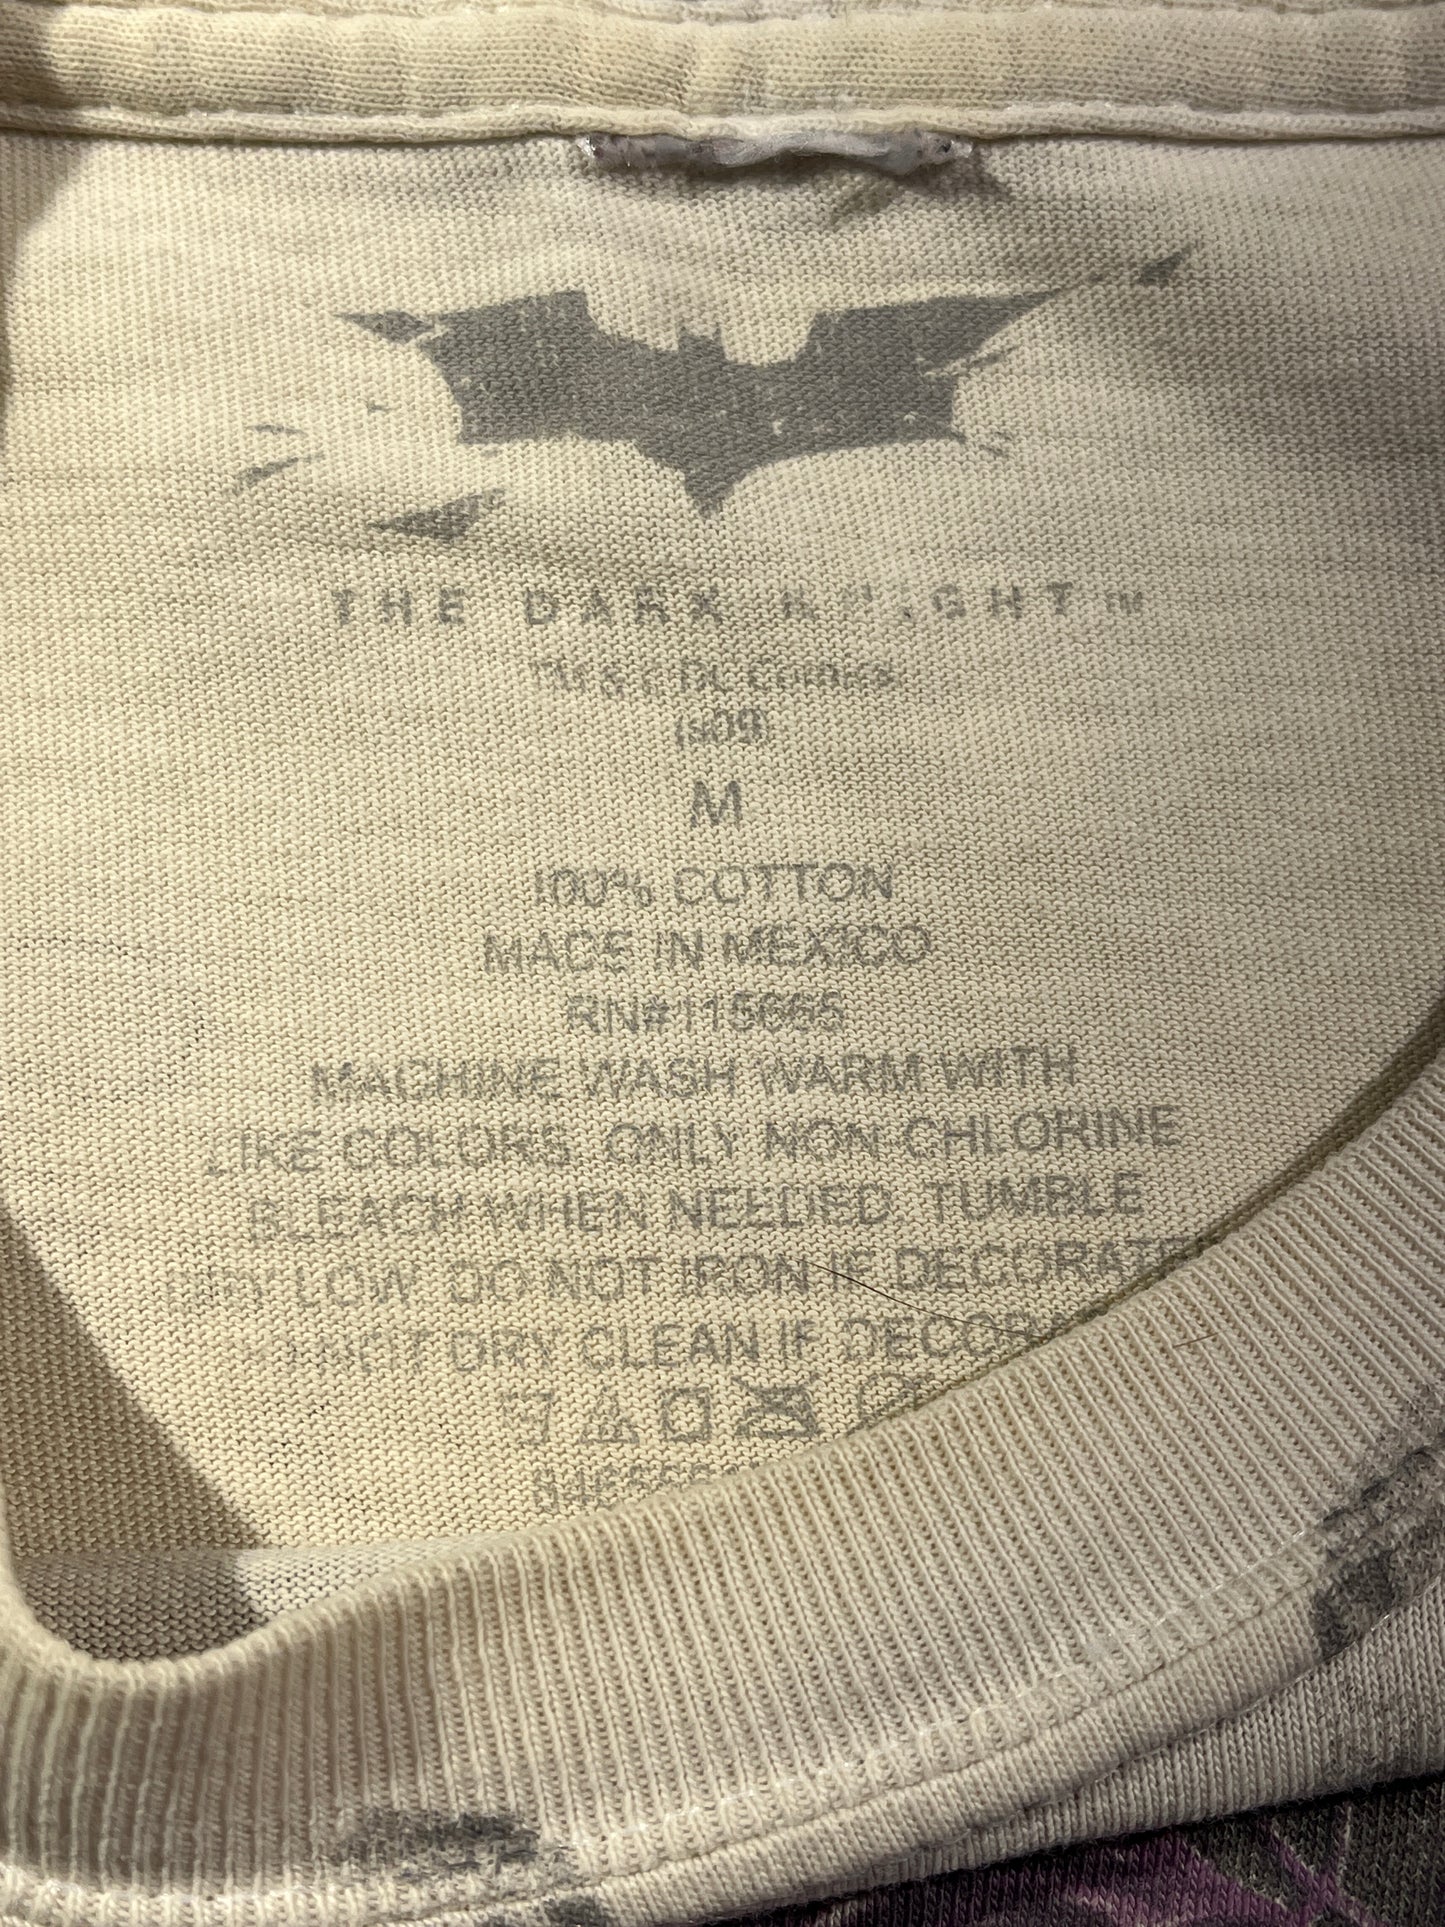 Vintage Joker T-Shirt The Dark Knight Heath Ledger